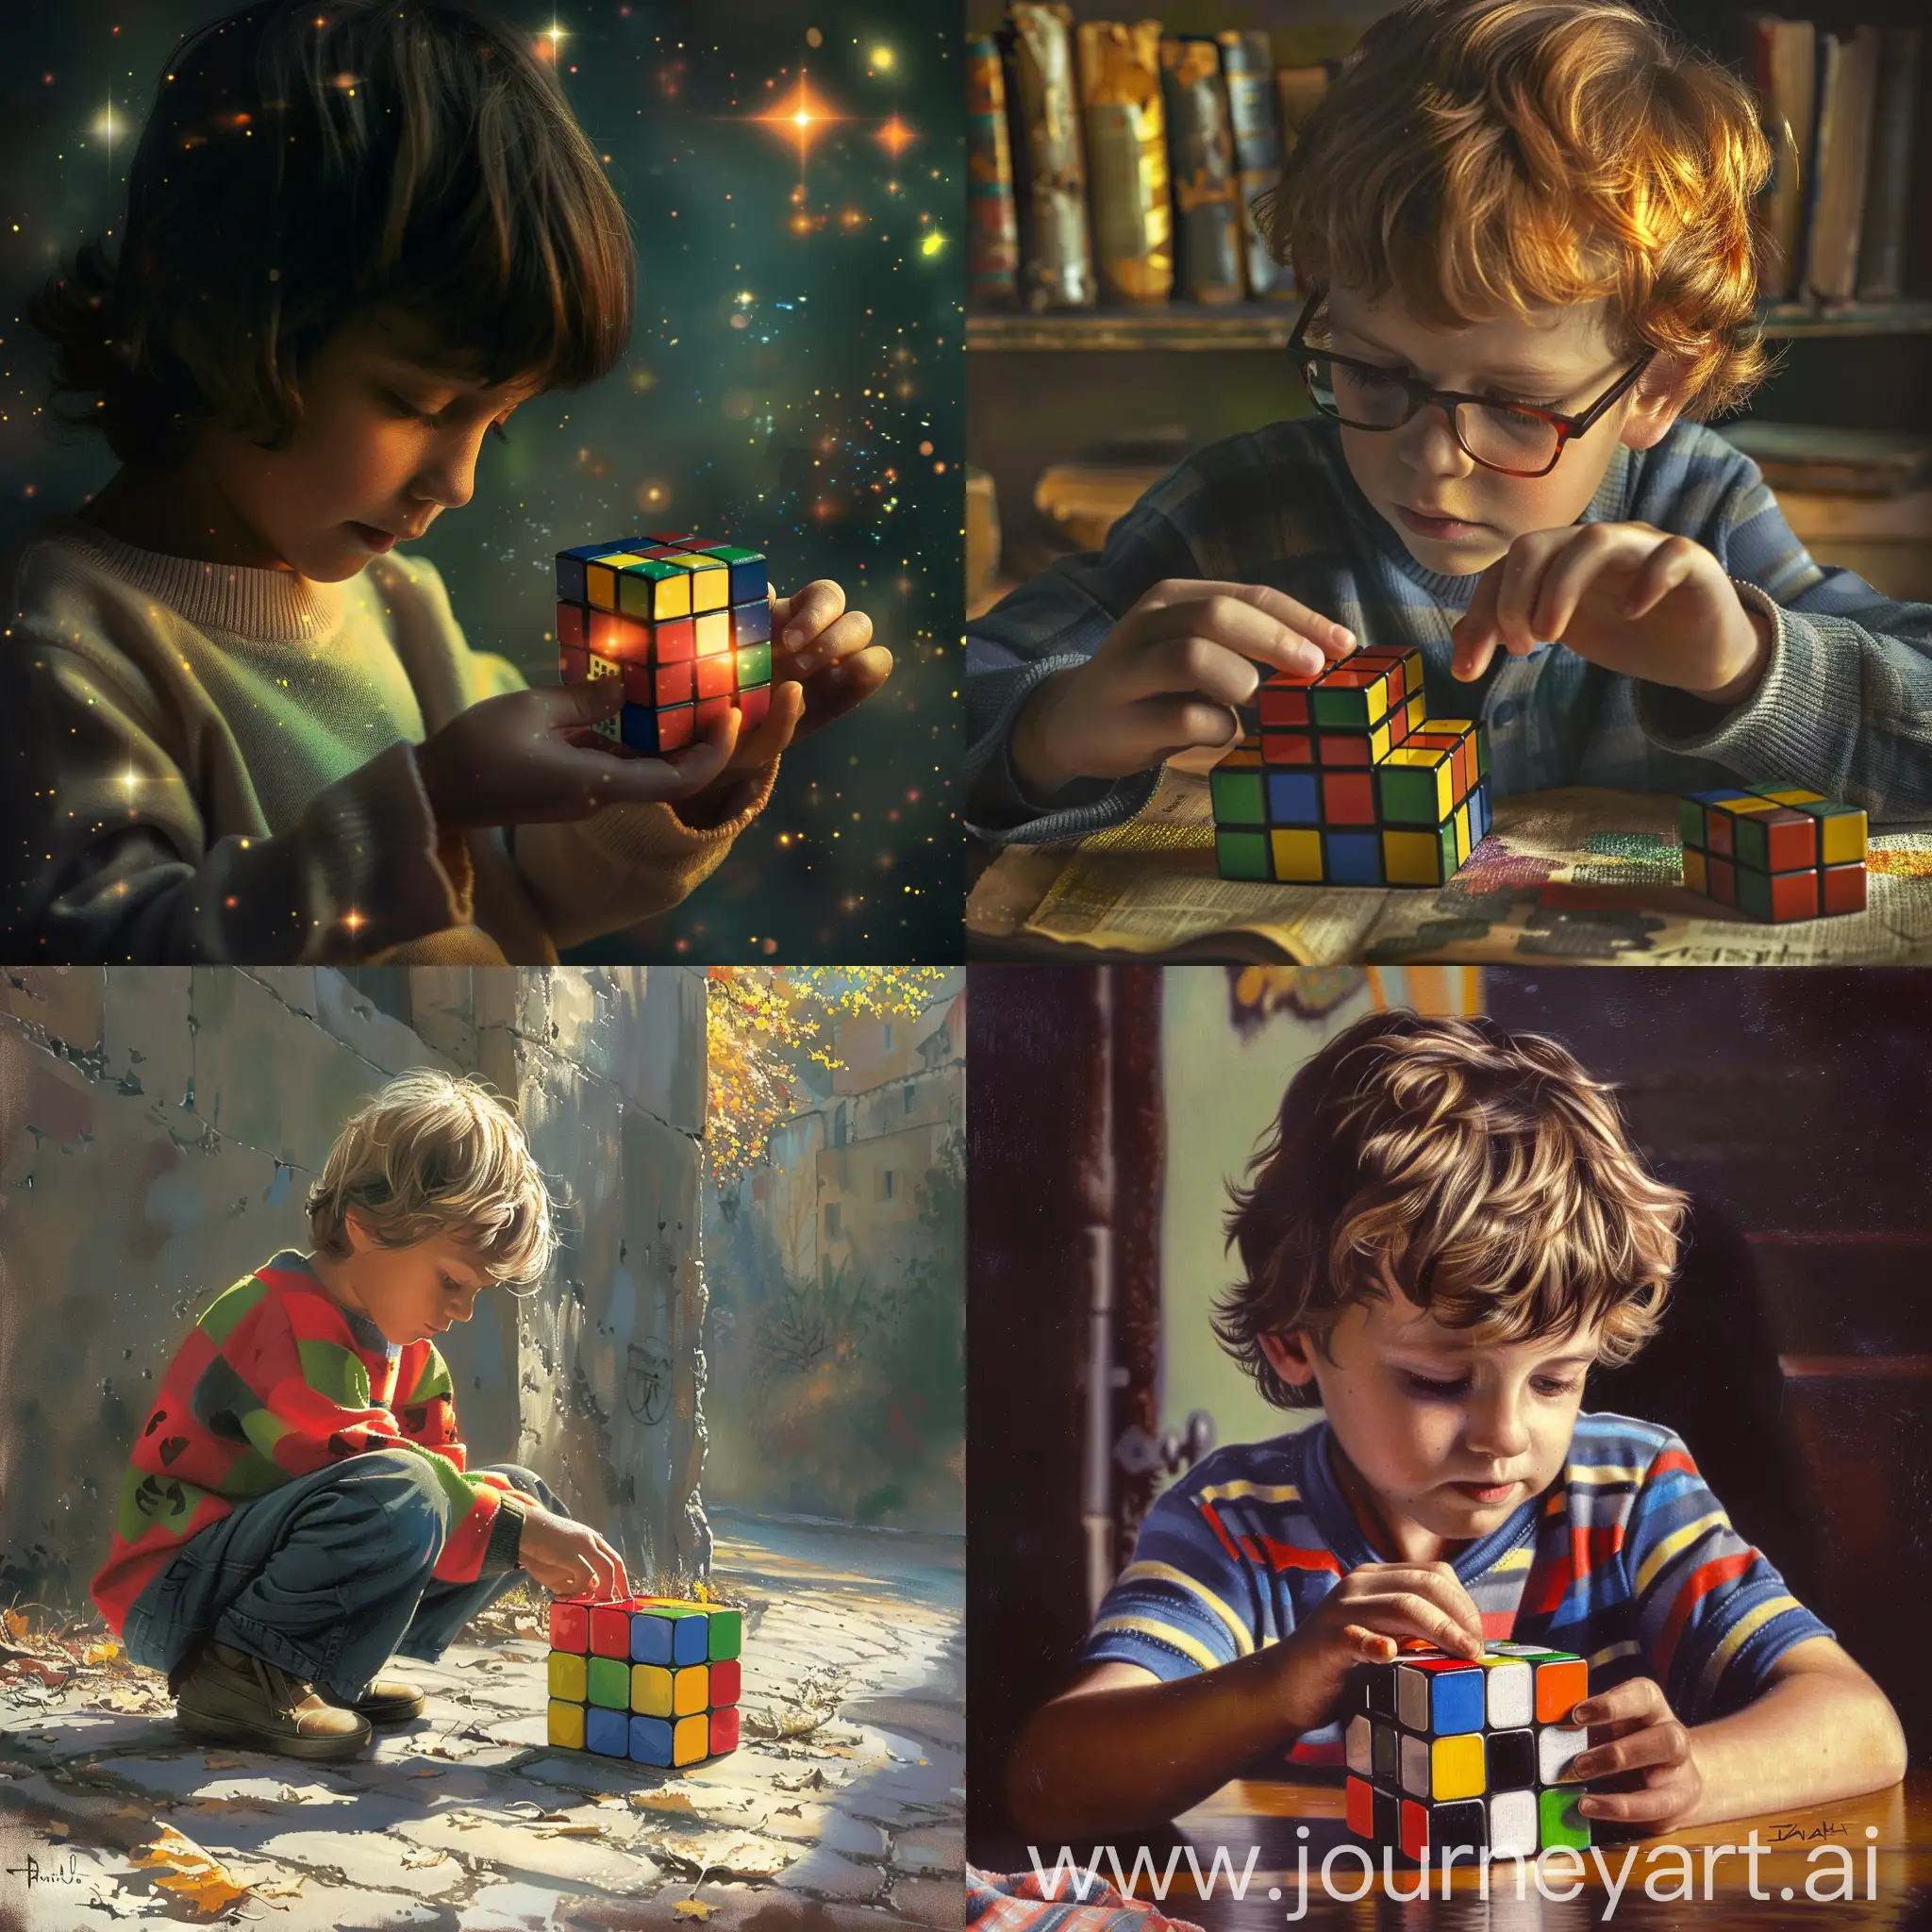   A child solving a Rubik's cube